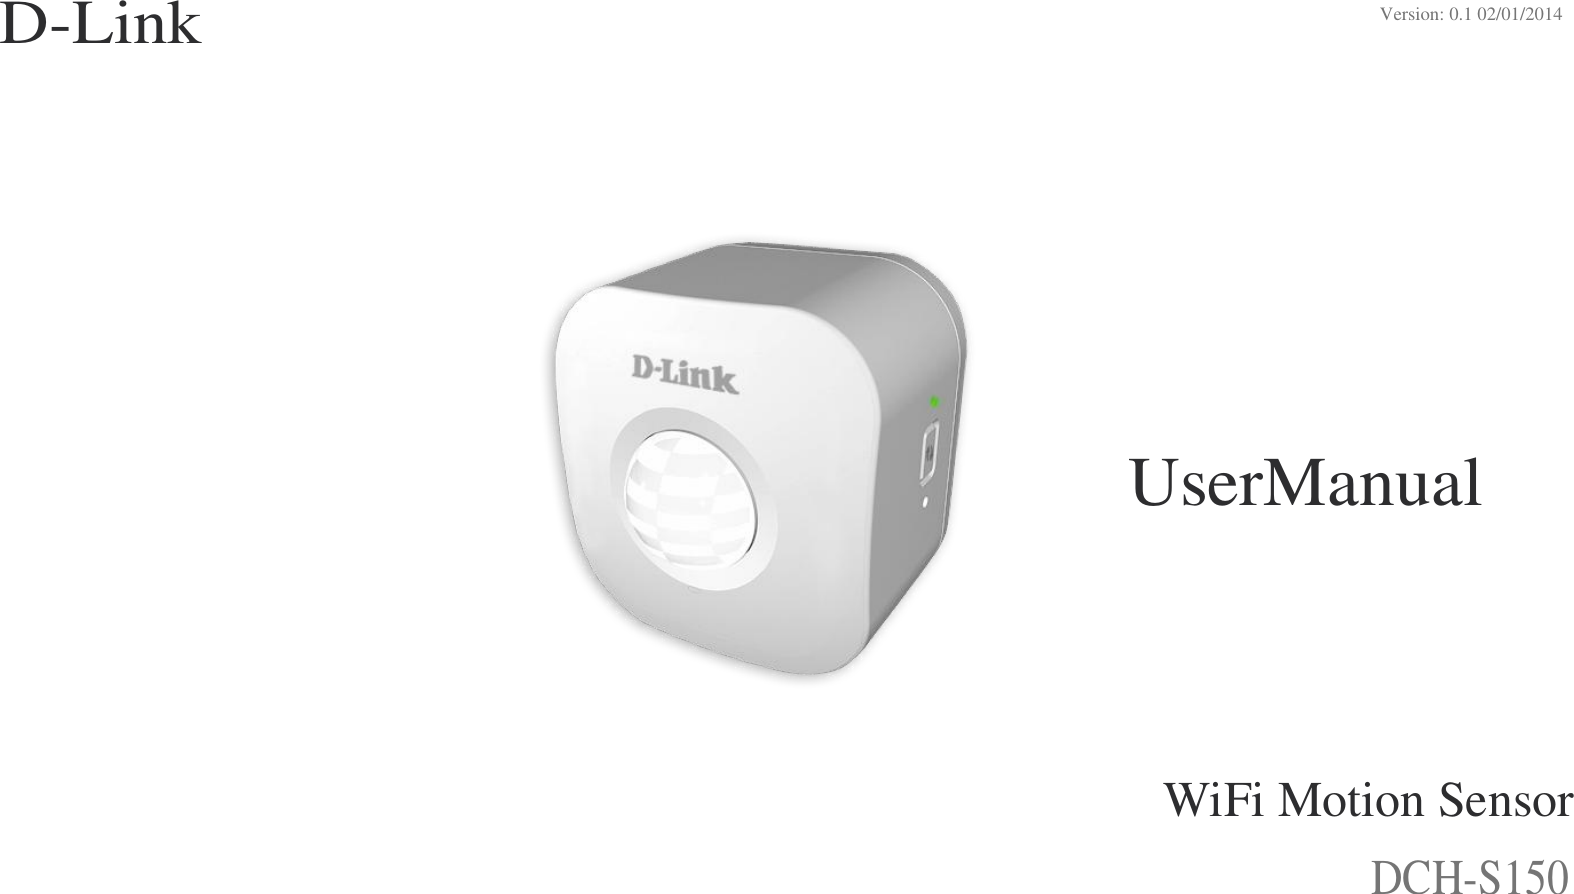 D-Link Version: 0.1 02/01/2014                      UserManual             WiFi Motion Sensor  DCH-S150 